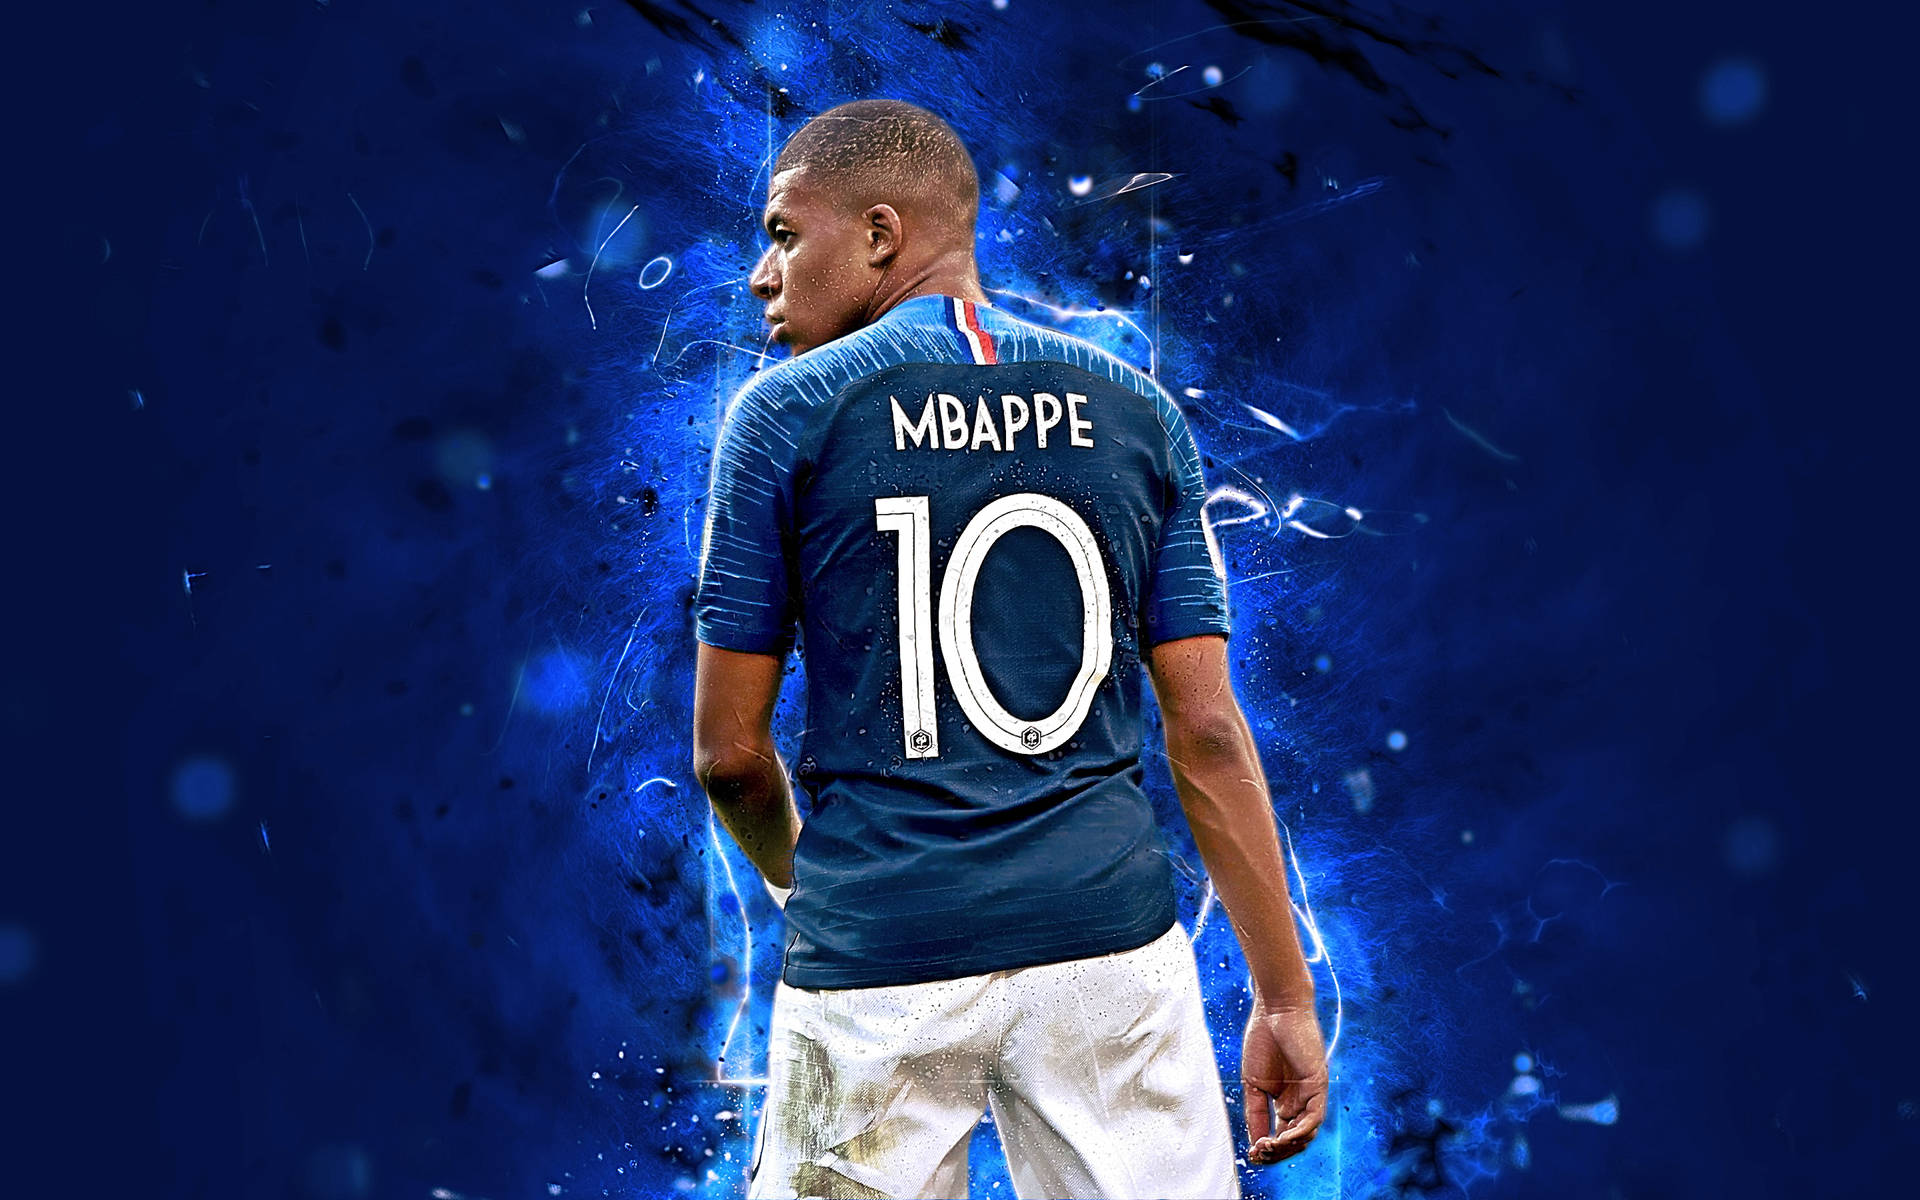 Number 10 Blue Jersey Mbappe Fanart